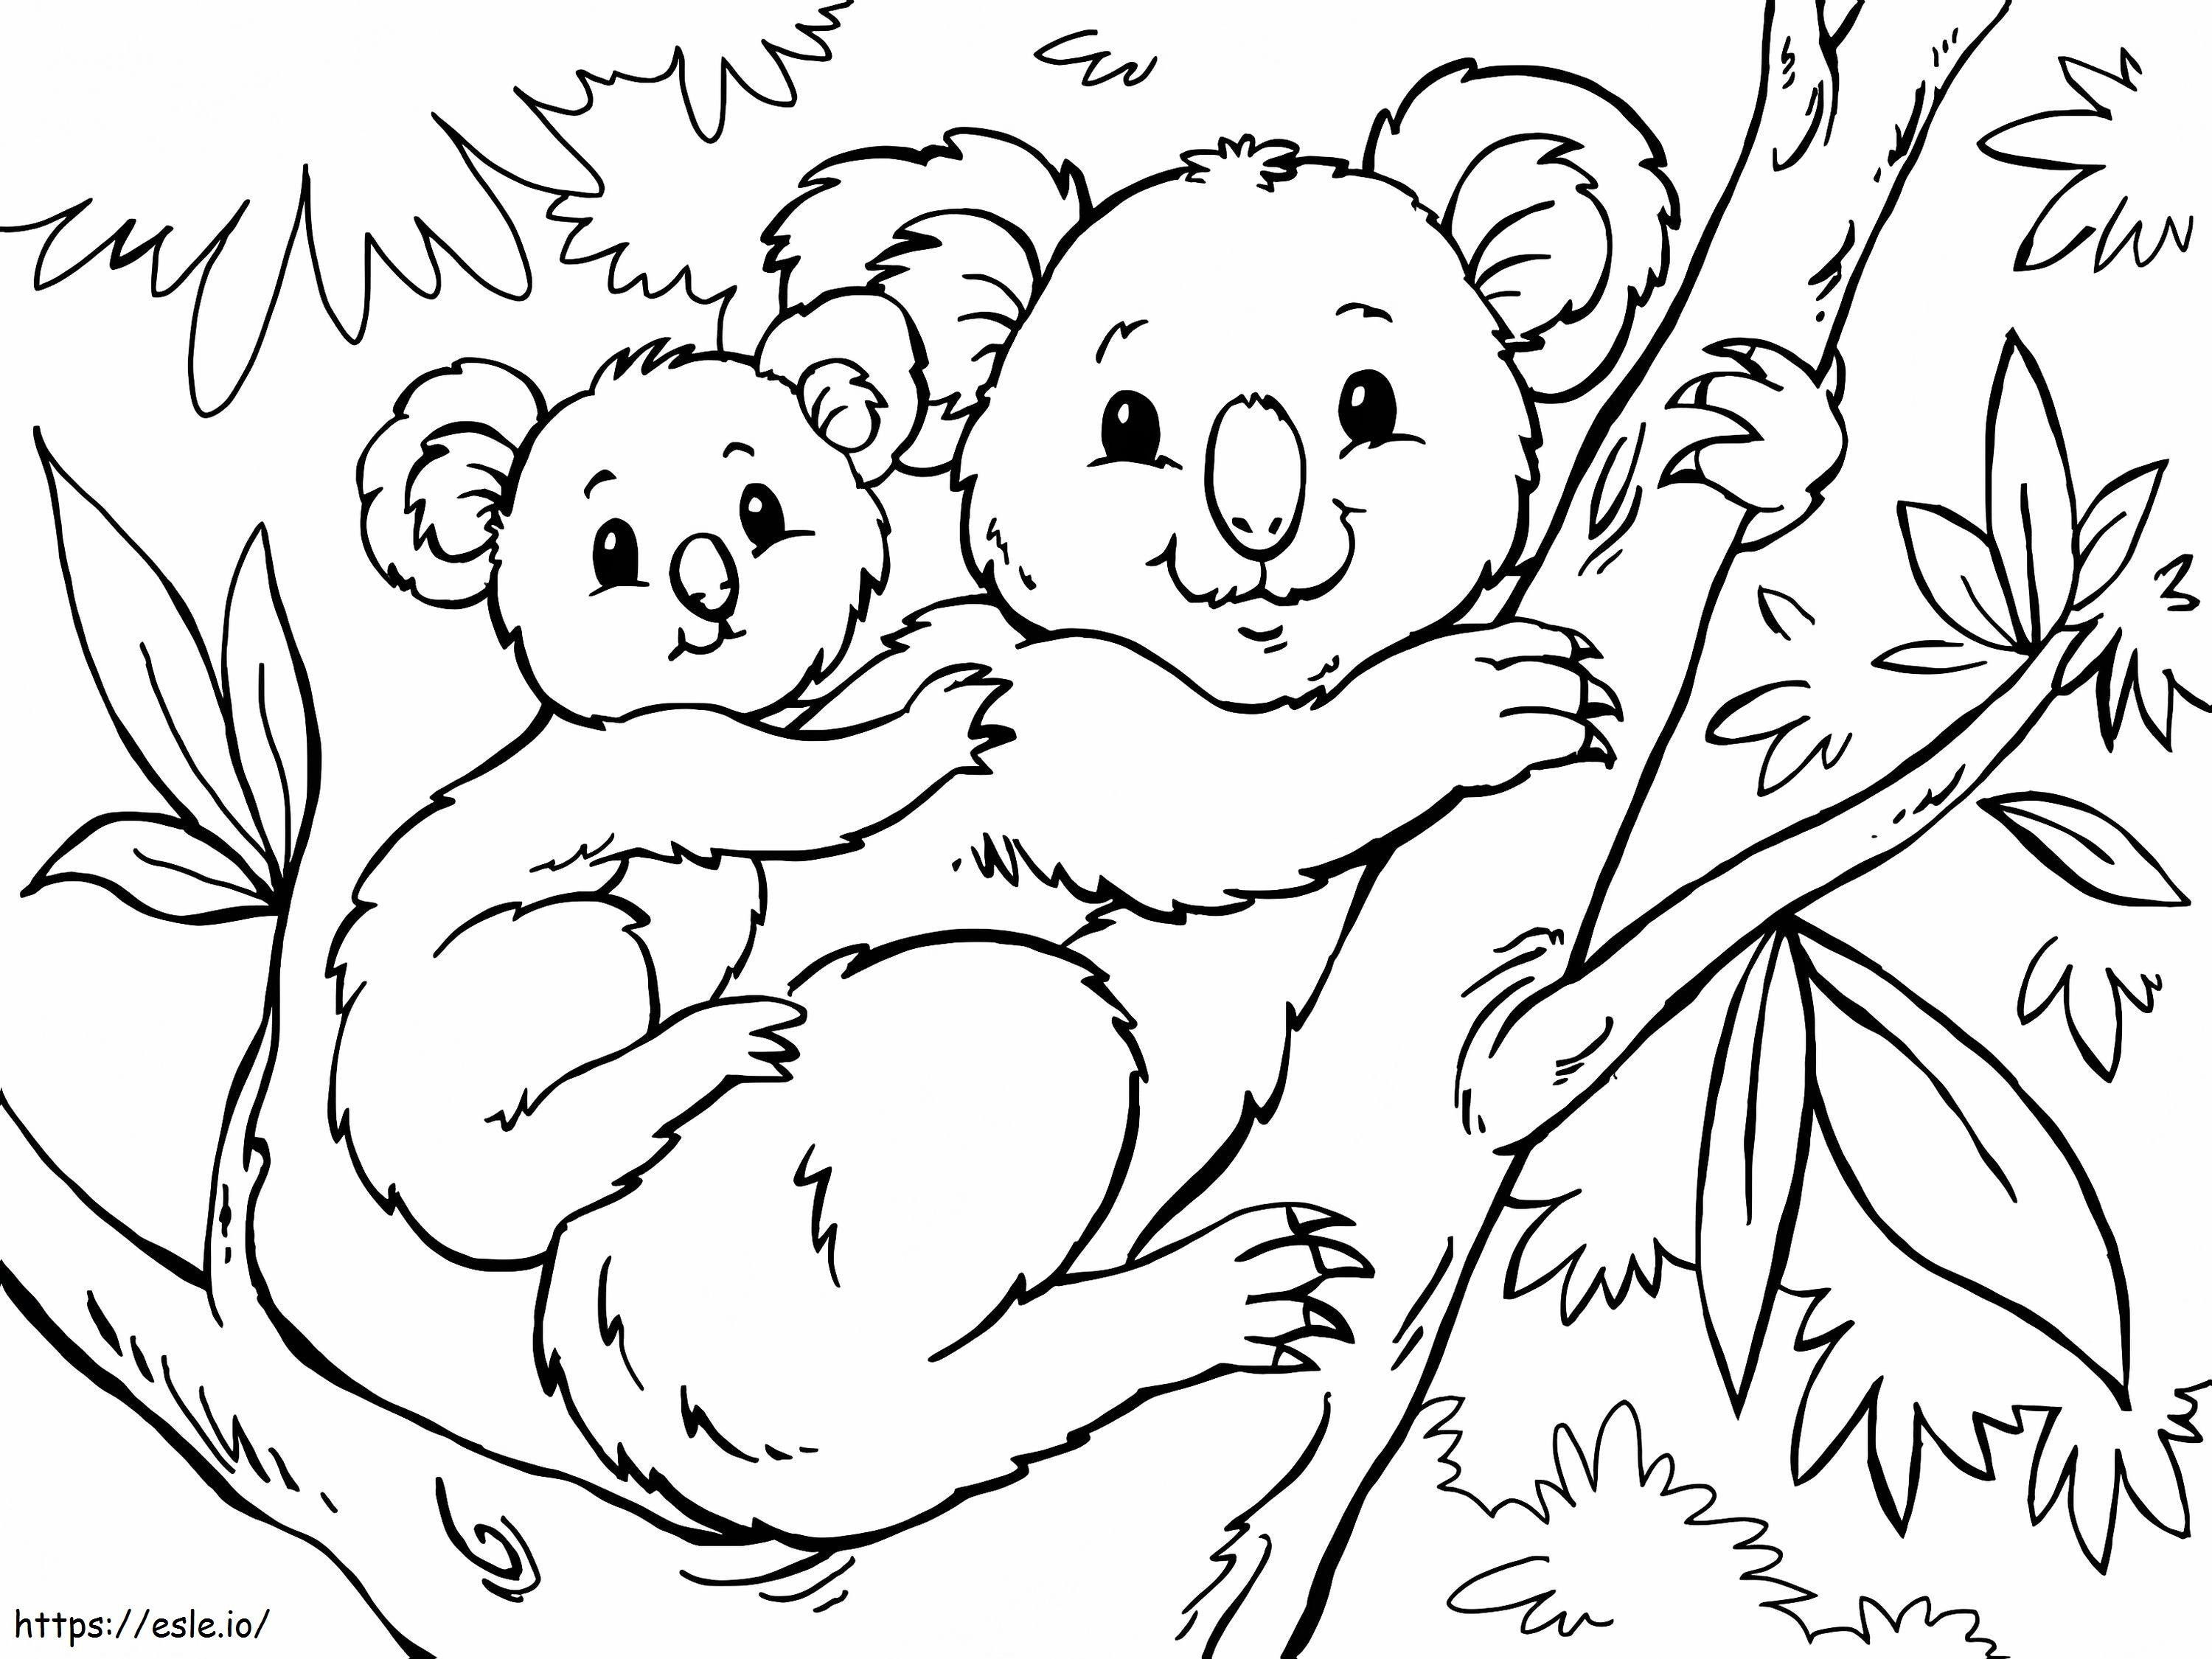 Mãe coala com bebê coala na árvore para colorir